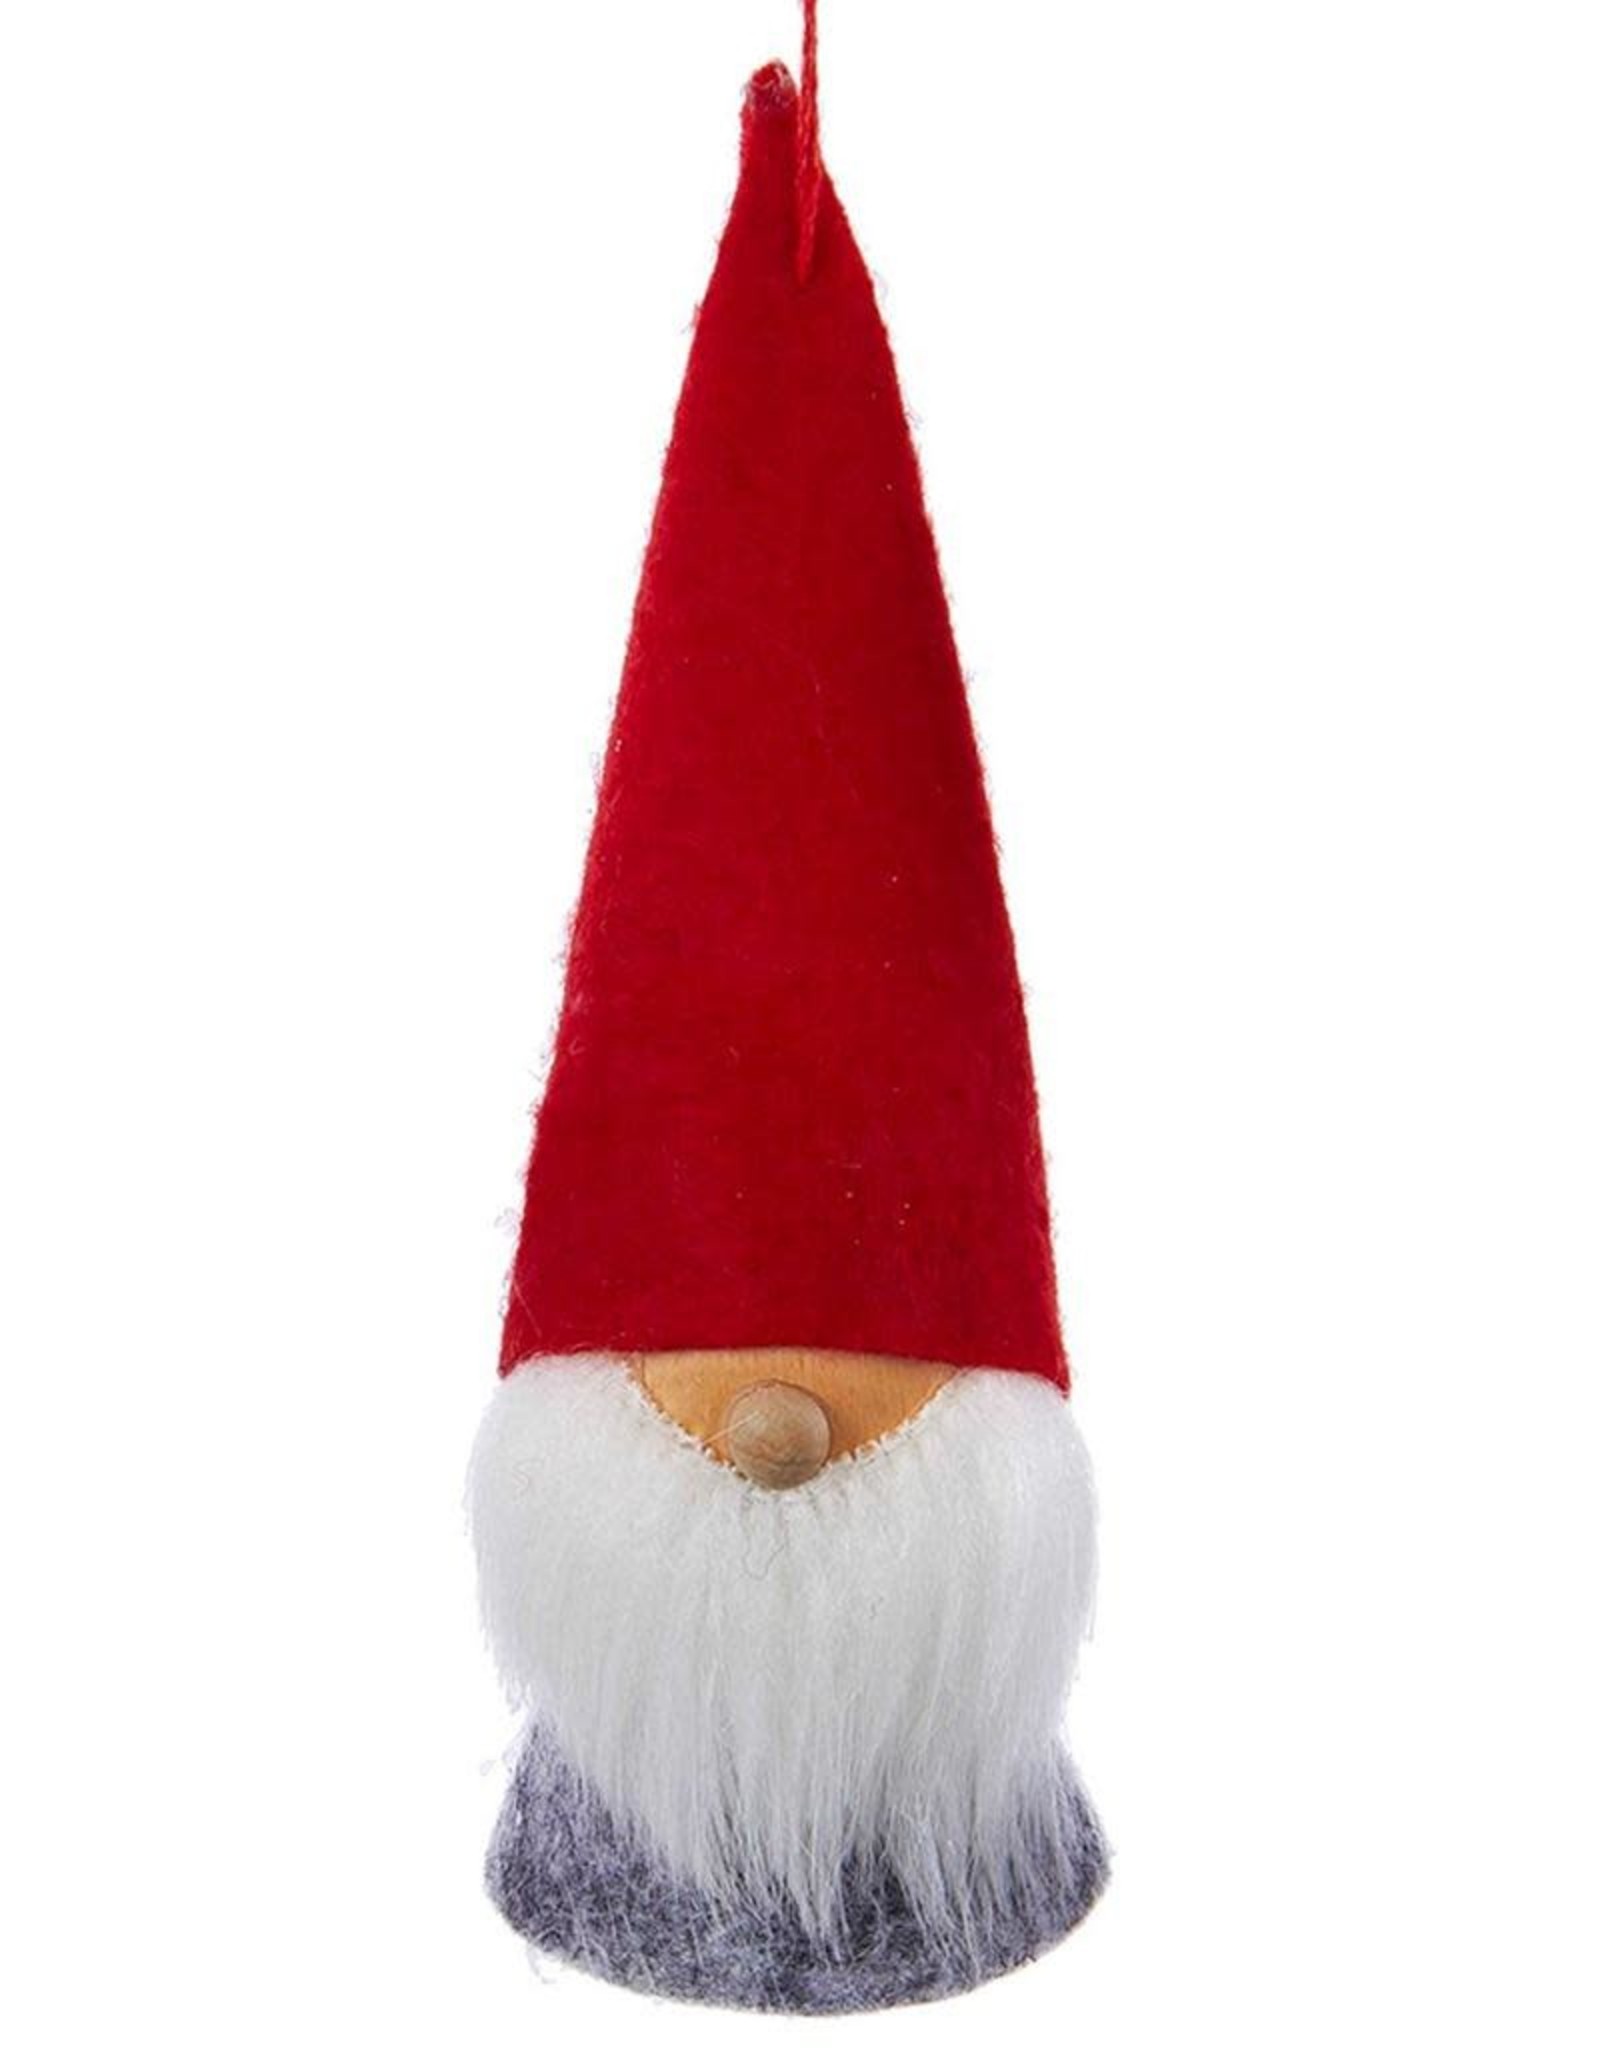 Kurt Adler Gnomes Wood and Felt Dwarf Gnome Ornament 5 inch w Red Hat